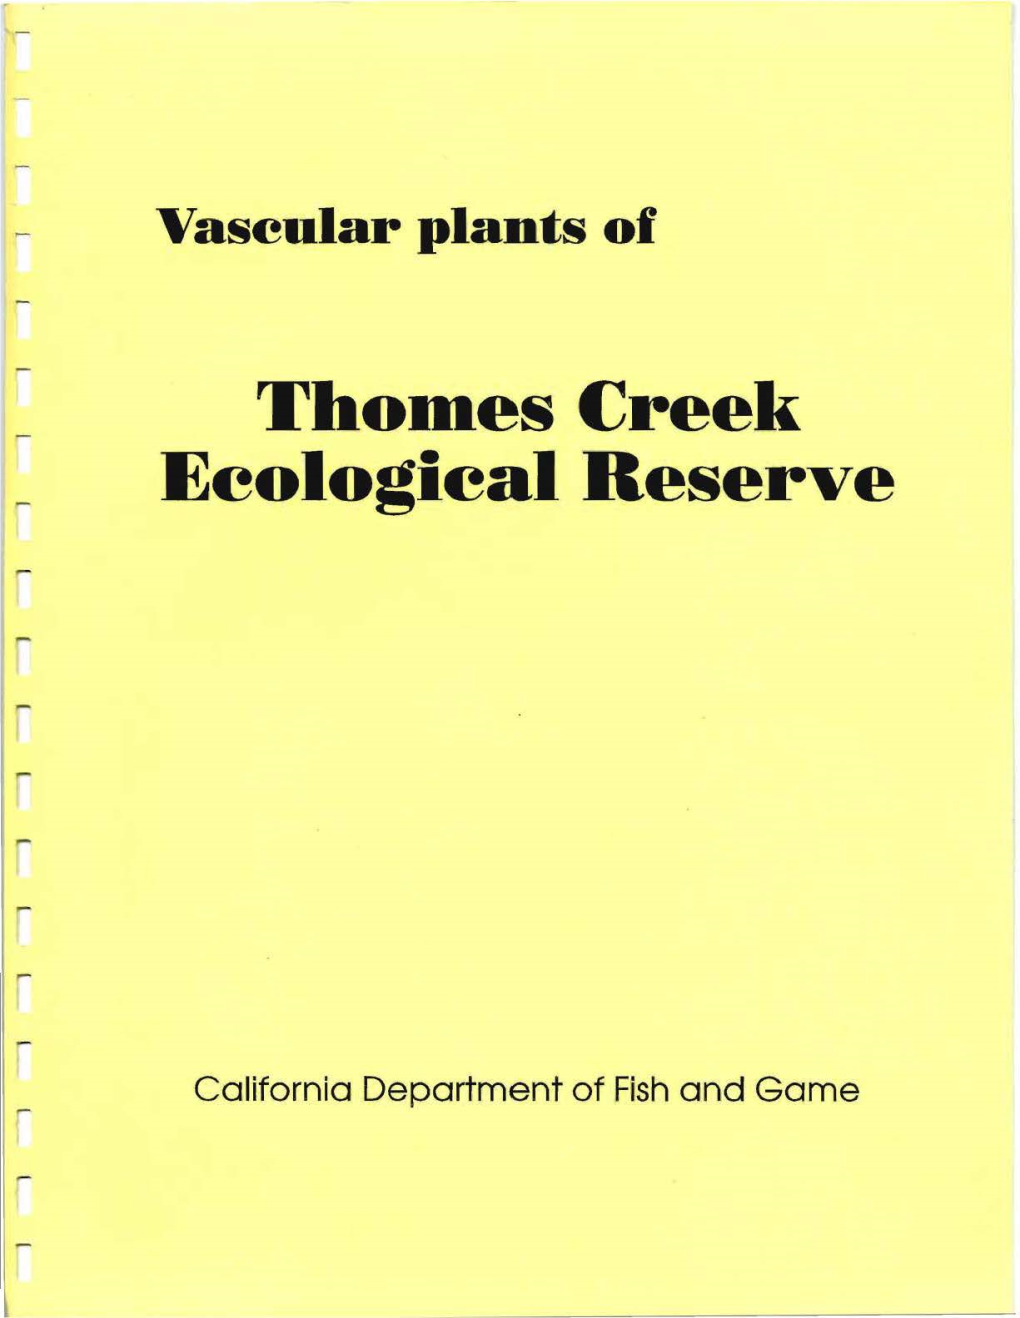 Thomes Creek Ecological Reserve